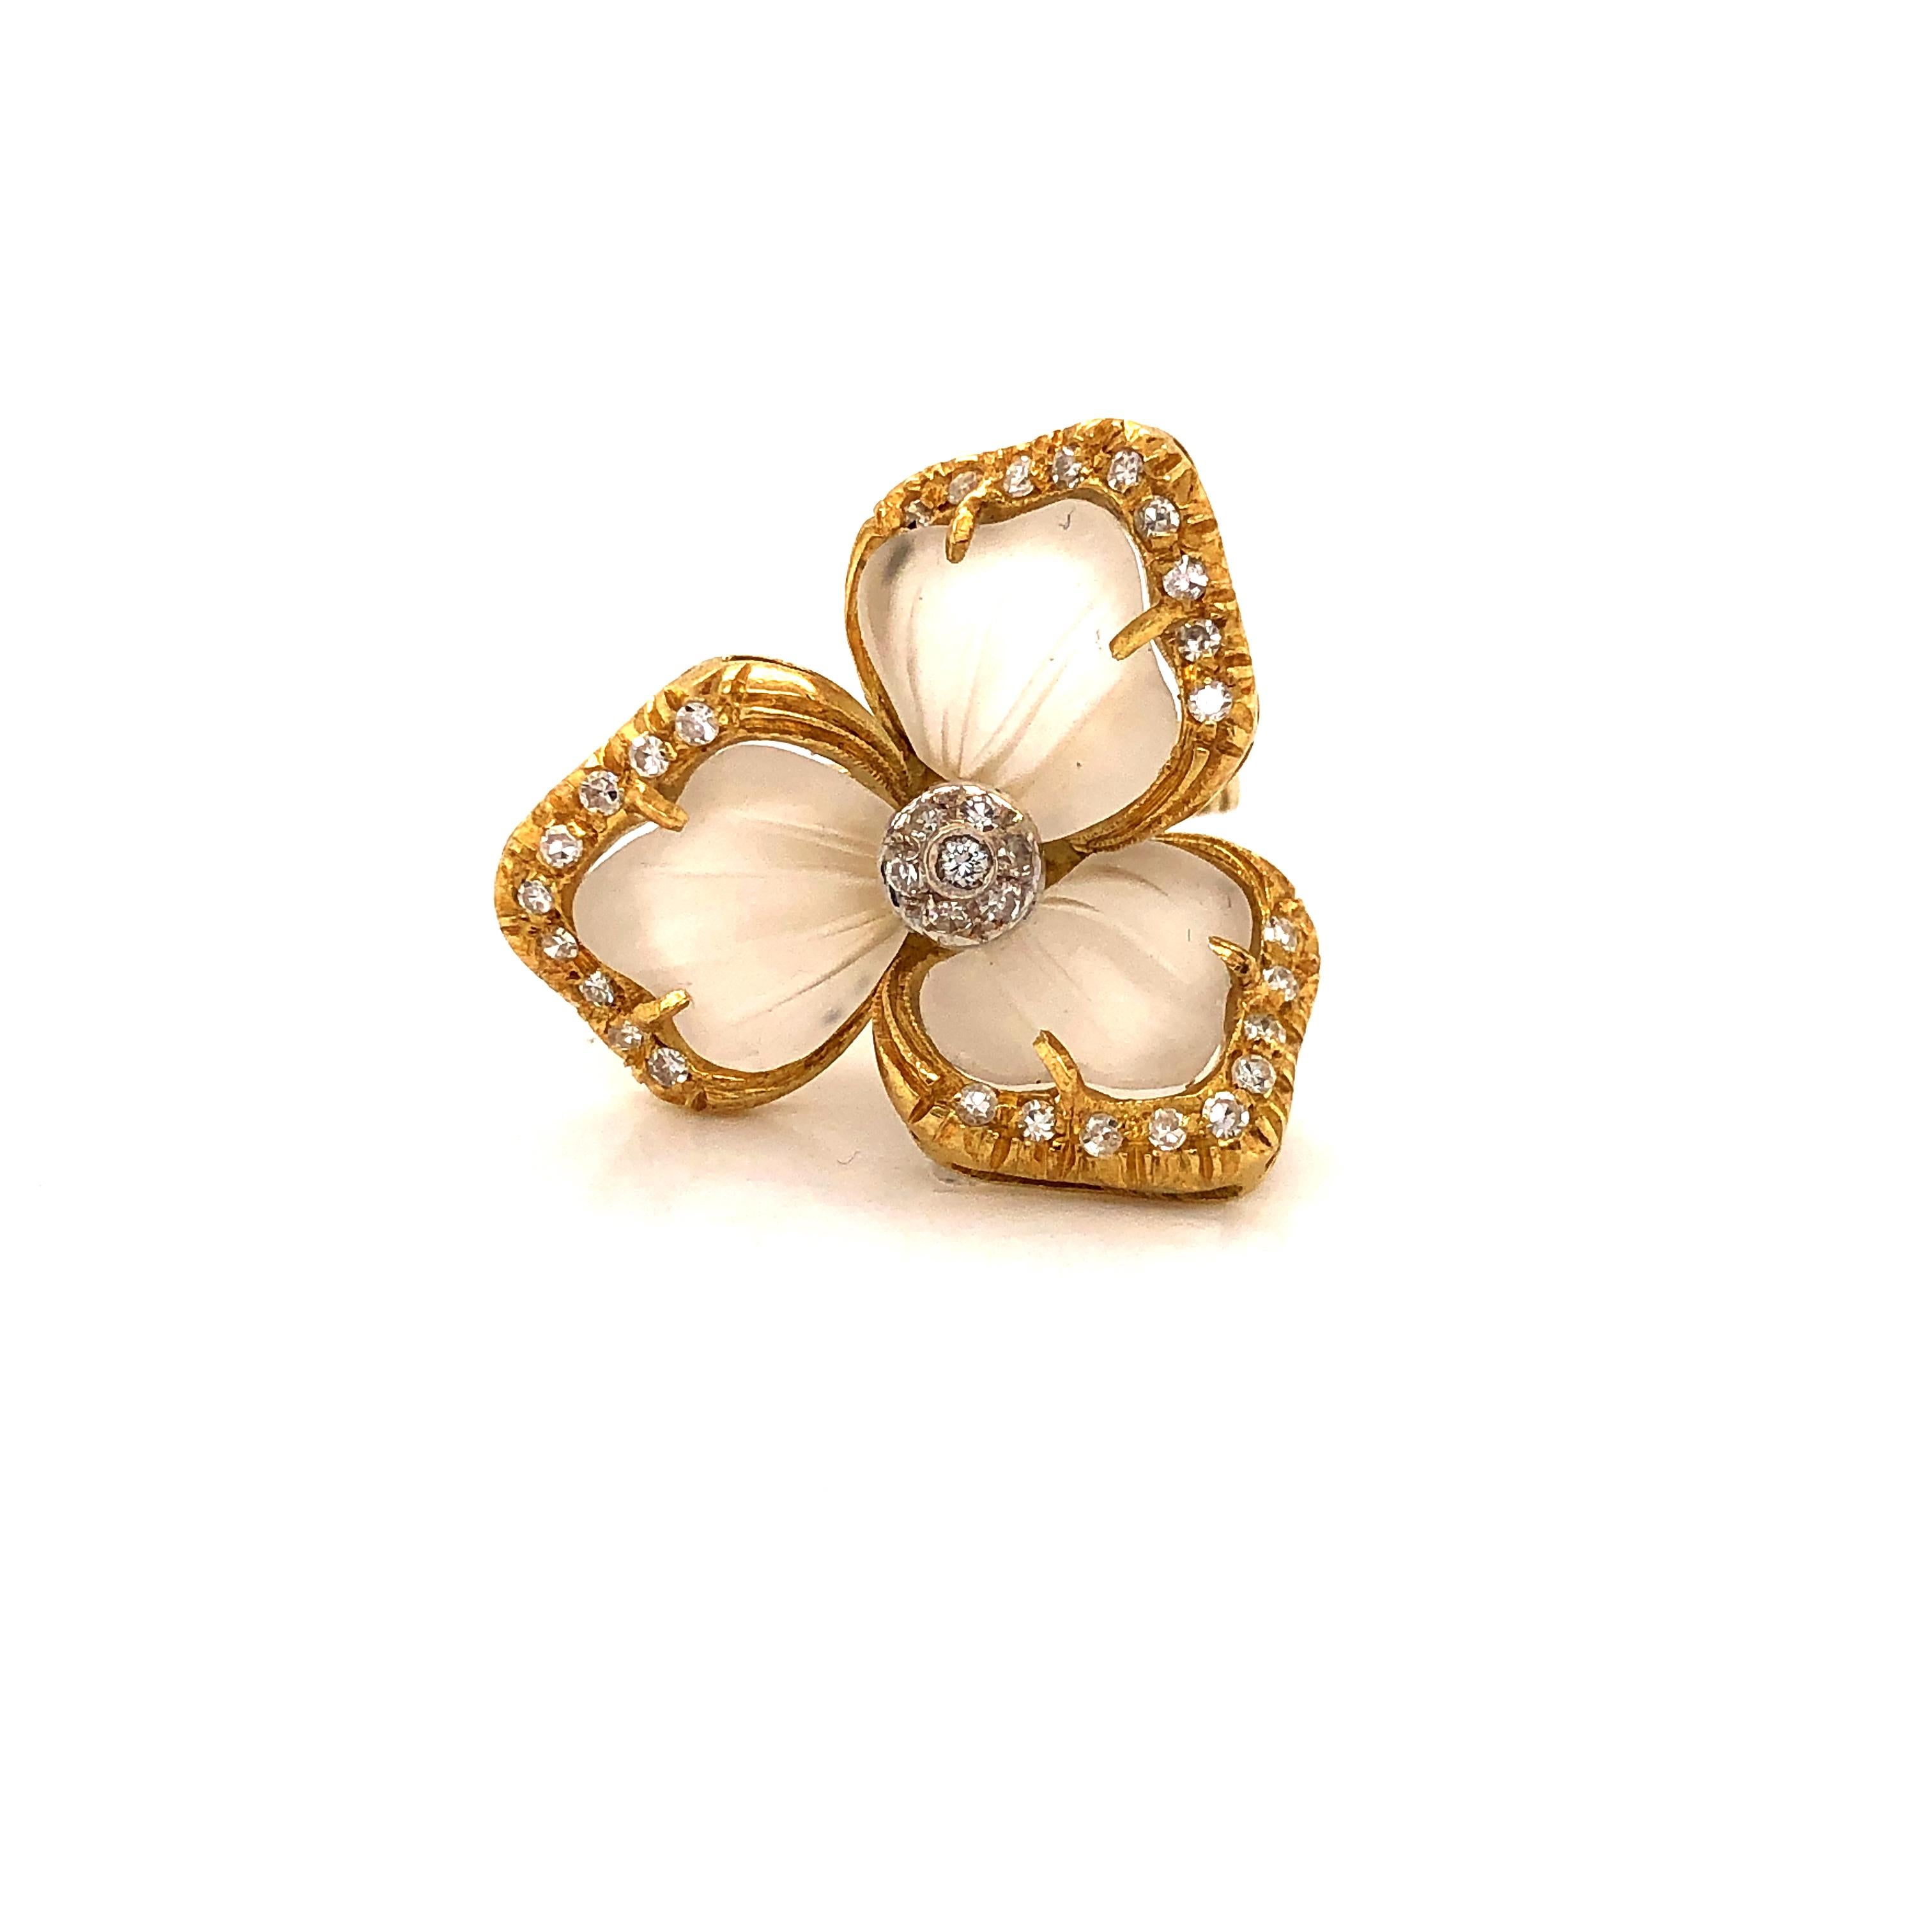 Retro Estate Rock Crystal Quartz and Diamond Floral Ring and Earring Set 18 Karat Gold